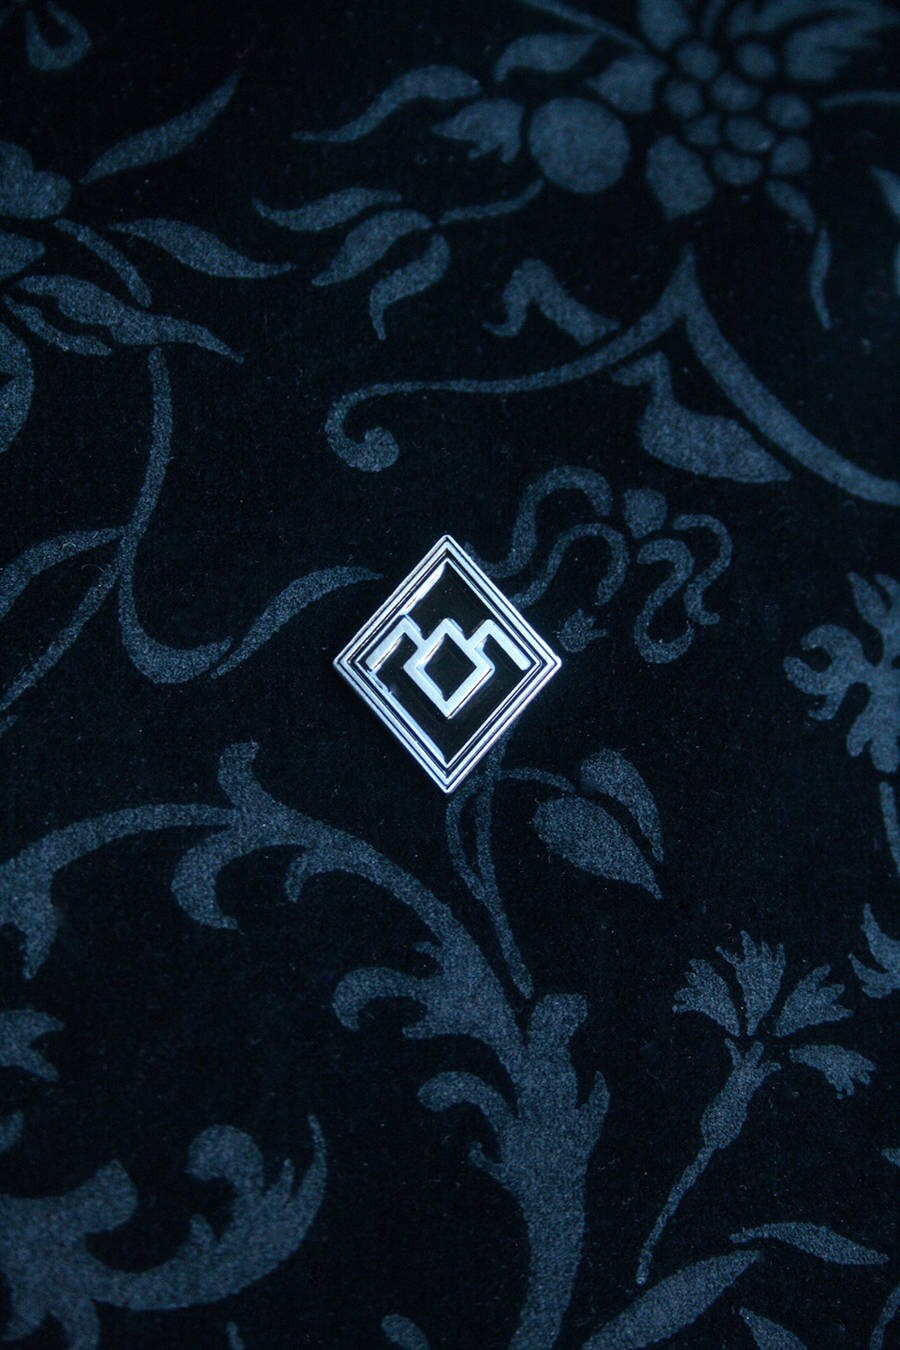 Black Lodge raised style - PIN